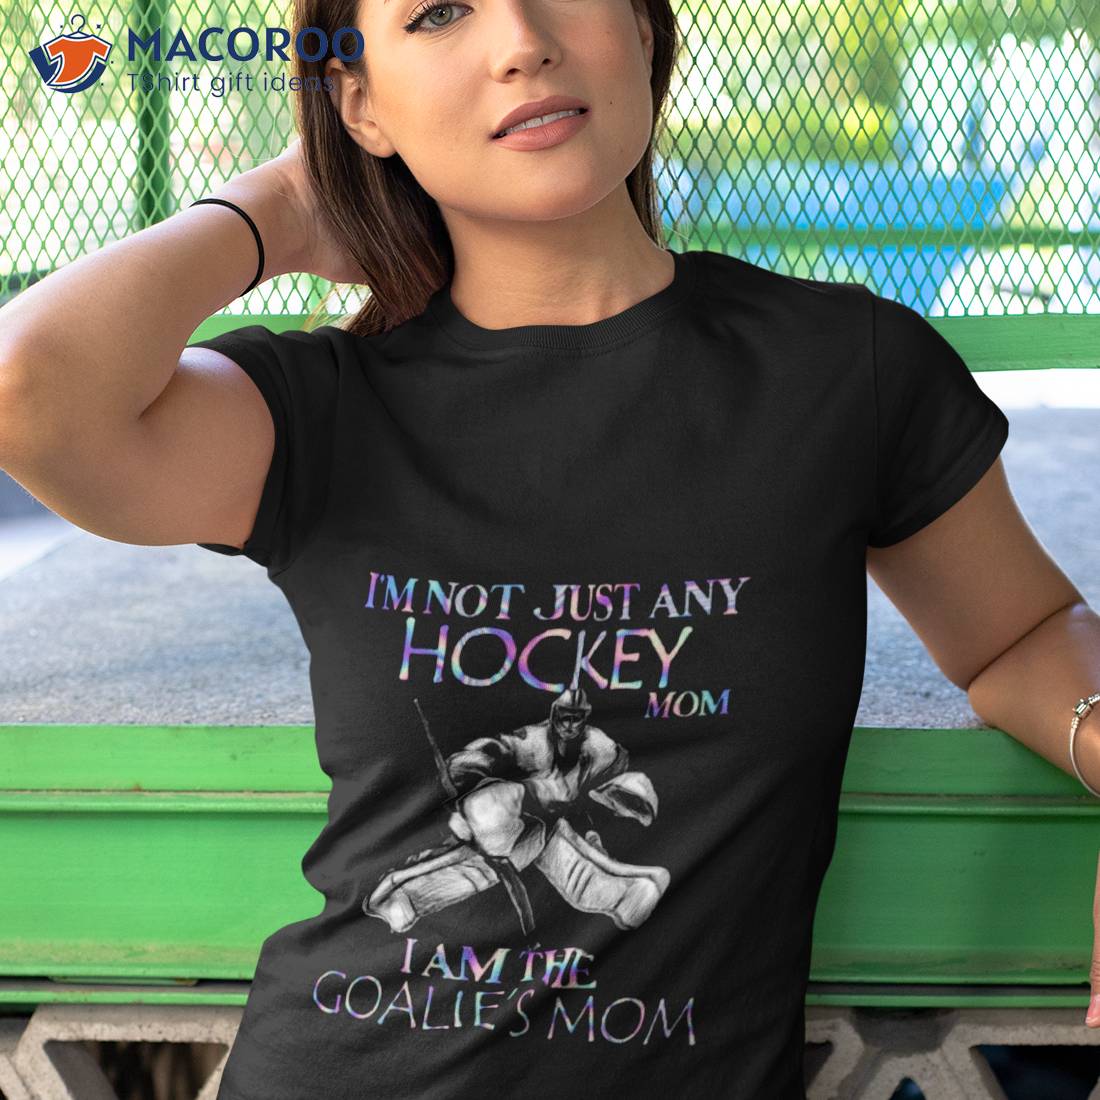 I'm not just any Hockey mom I am the Goalie's mom shirt, hoodie